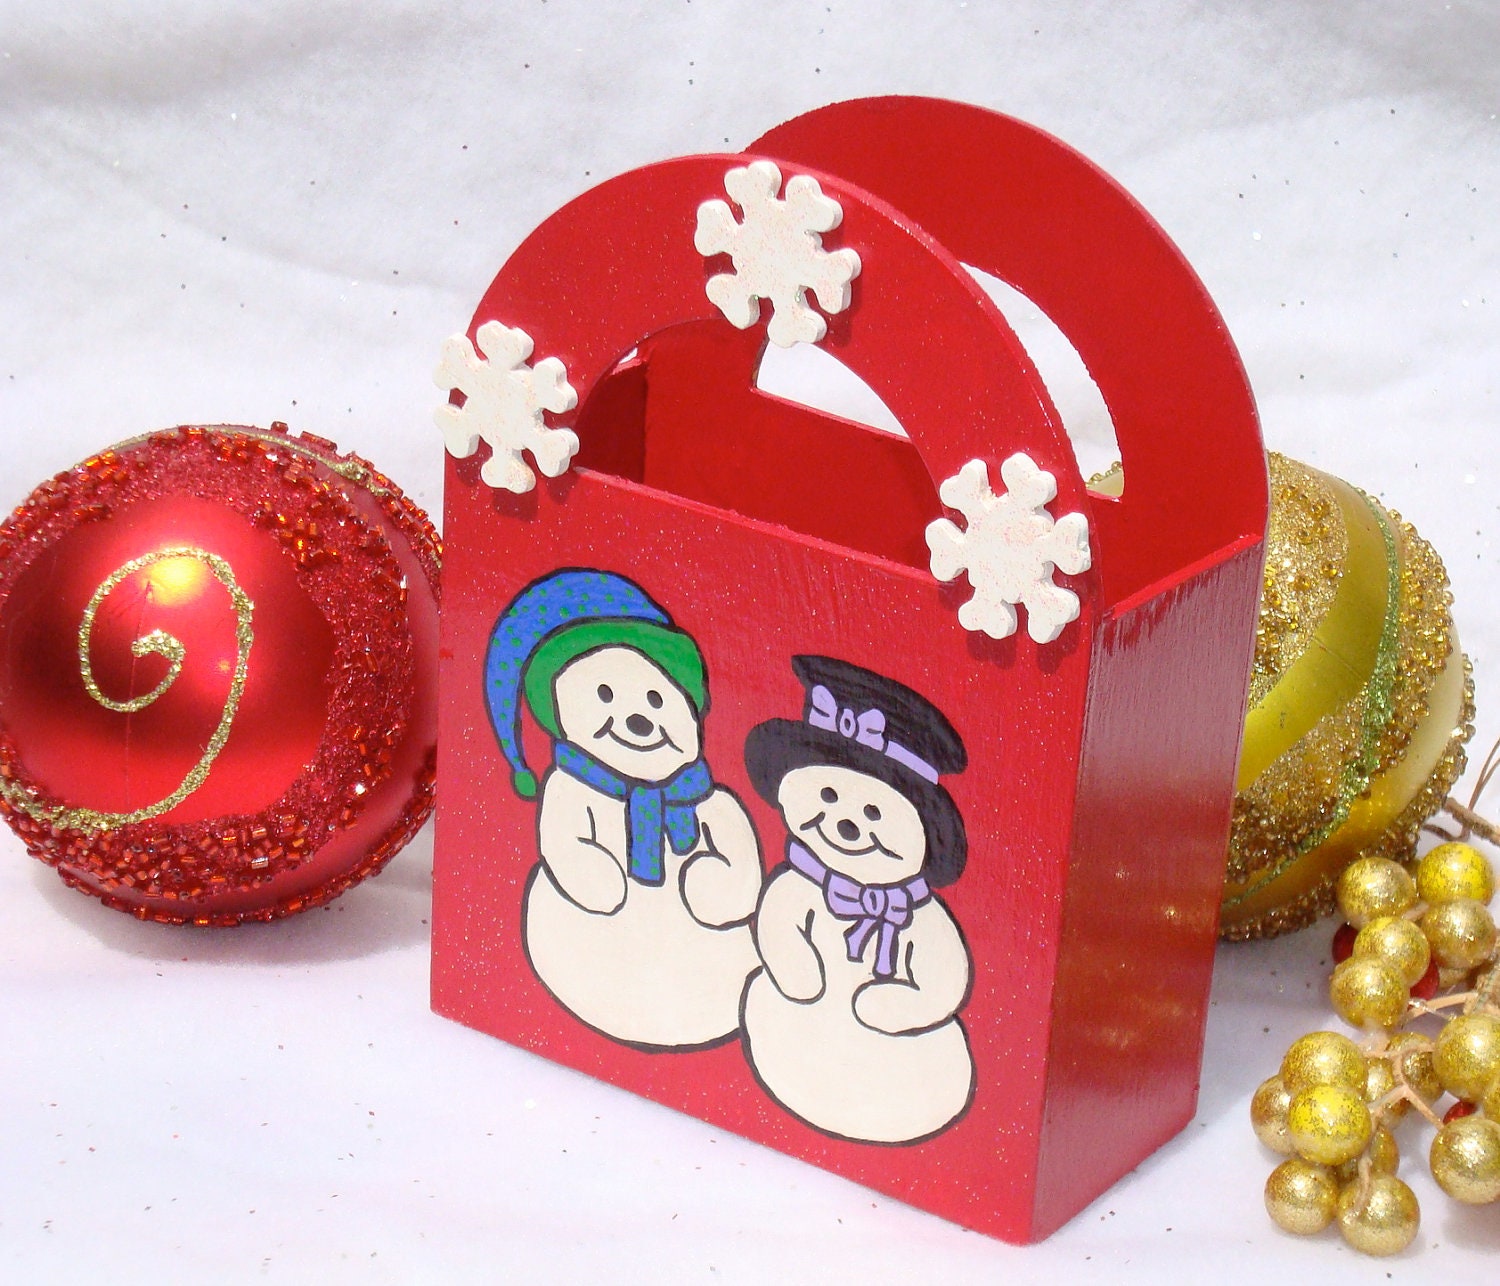 Happy Snowmen Holiday Gift Bag/ Ornament/ Decoration/ Keepsake